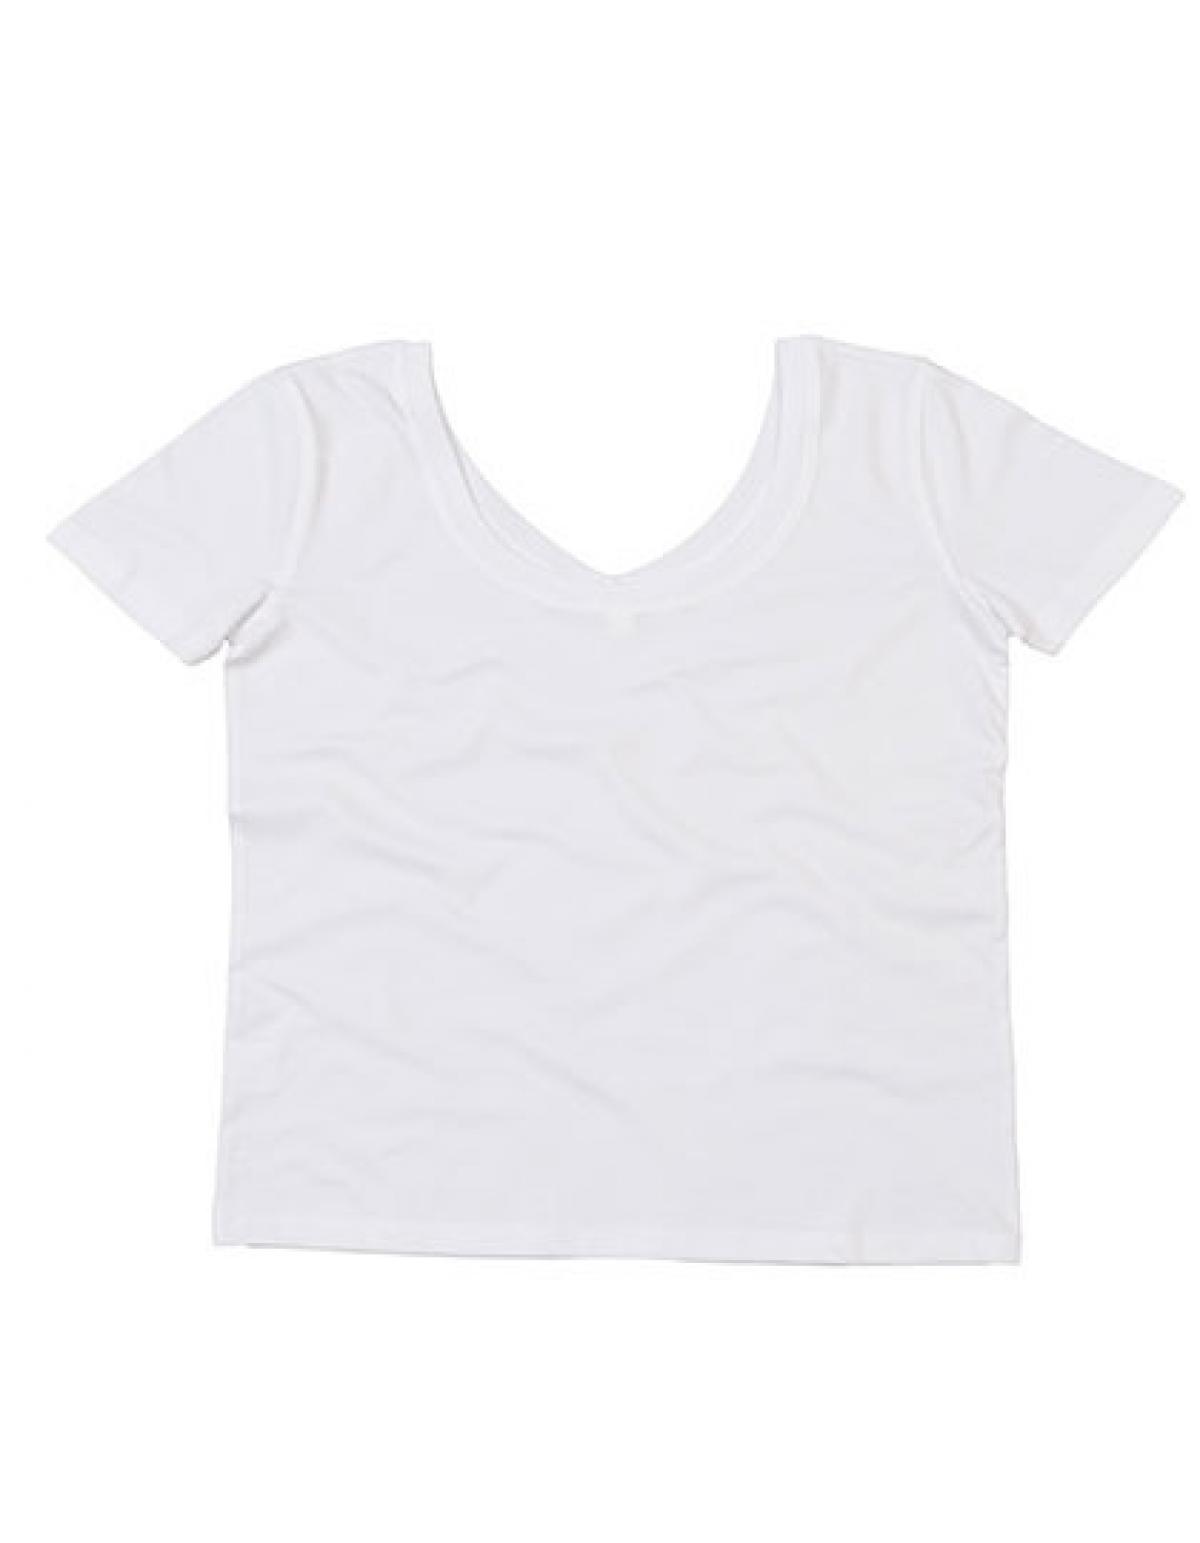 Damen Sommer V-Neck T-Shirt mit U-AusschnittMantis